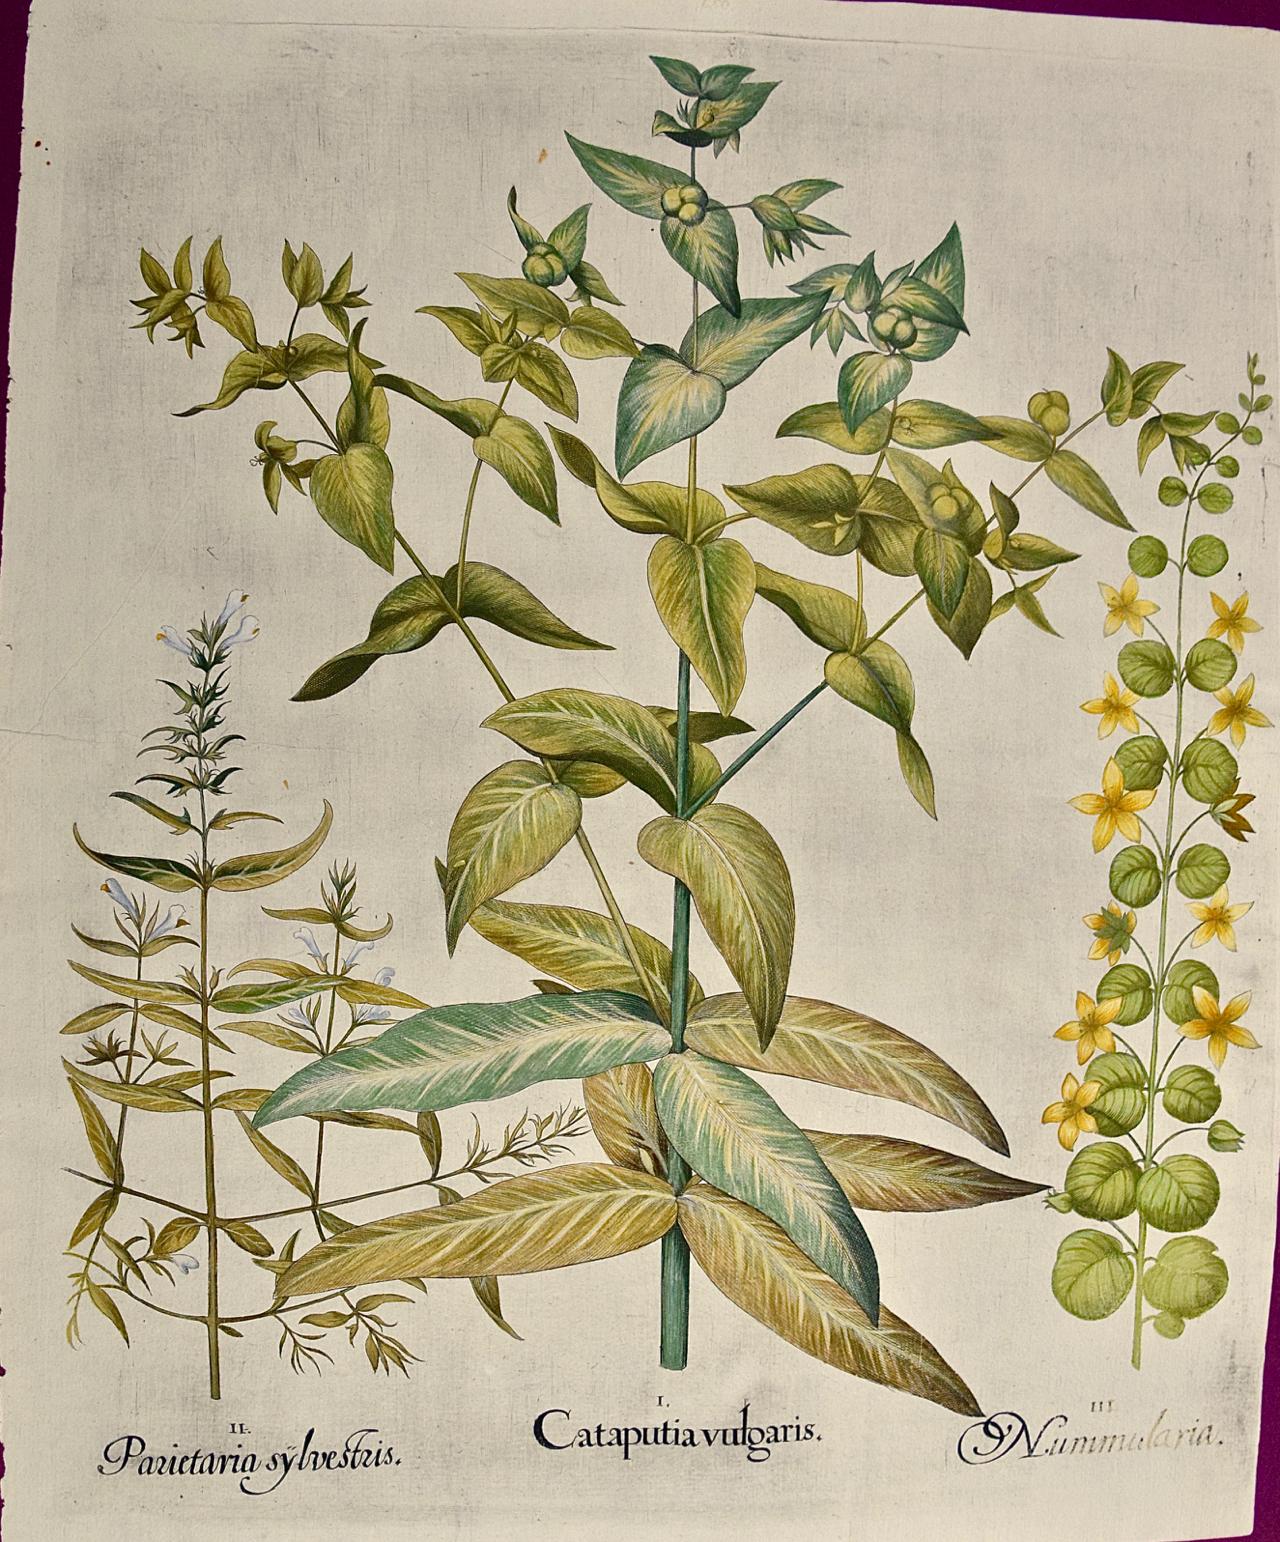 Basilius Besler Figurative Print - Flowering Lily Plants: A 17th C. Besler Hand-colored Botanical Engraving